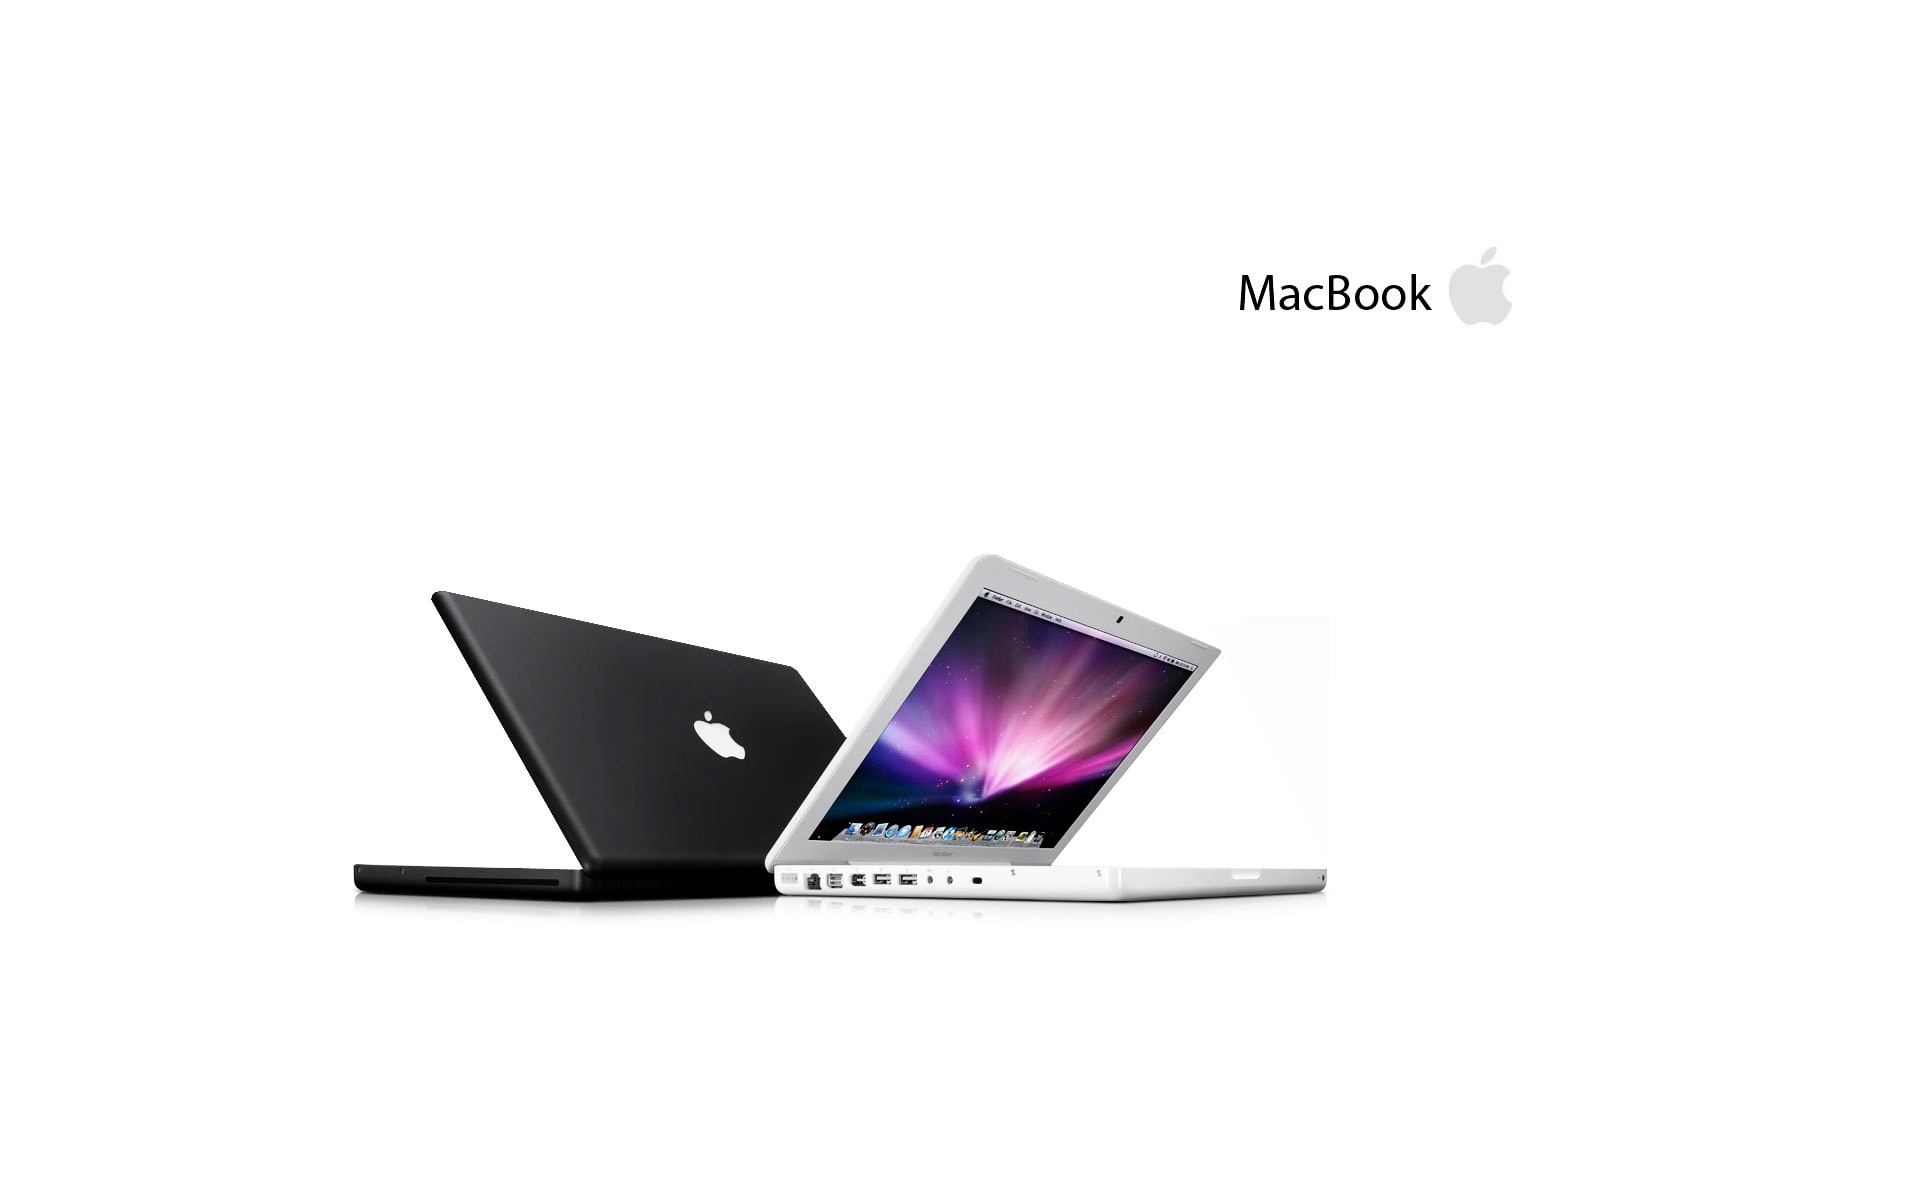 Apple MacBook, black macbook and white macbook, laptop, MacBook Pro